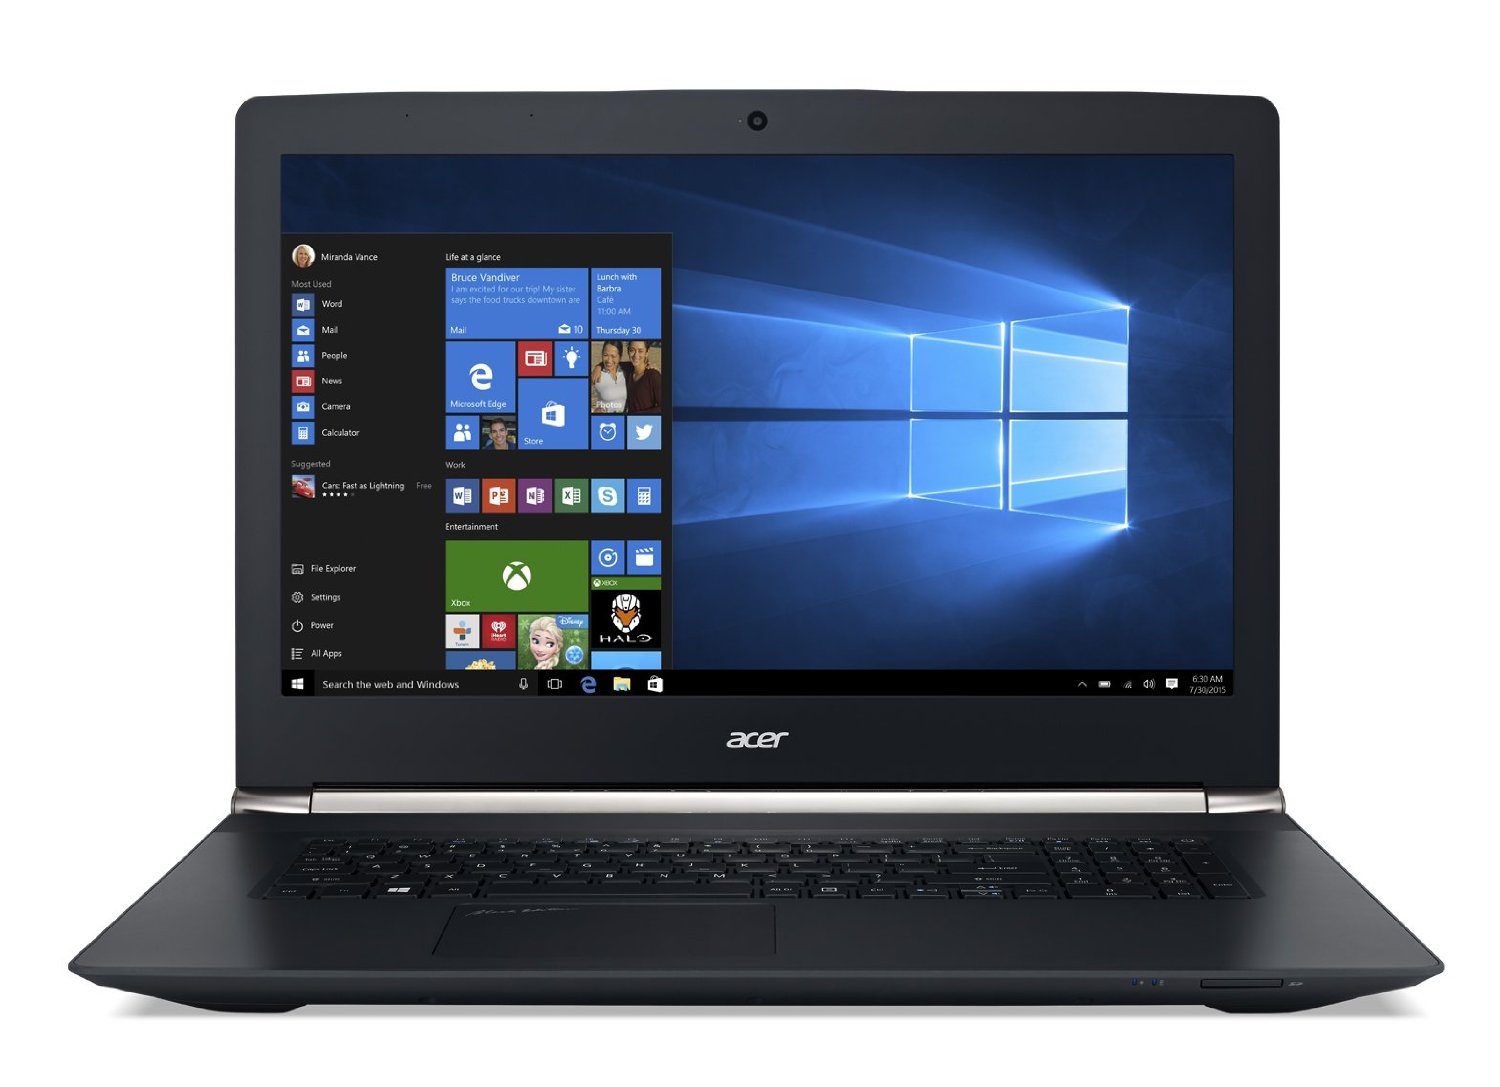 Acer Aspire V Nitro VN7 592G 77LB Gaming Laptop 6th Generation Intel Core i7 6700HQ (2.60 GHz) 16 GB Memory 1 TB HDD 256 GB SSD NVIDIA GeForce GTX 960M 4 GB GDDR5 15.6" Windows 10 Home 64 Bit